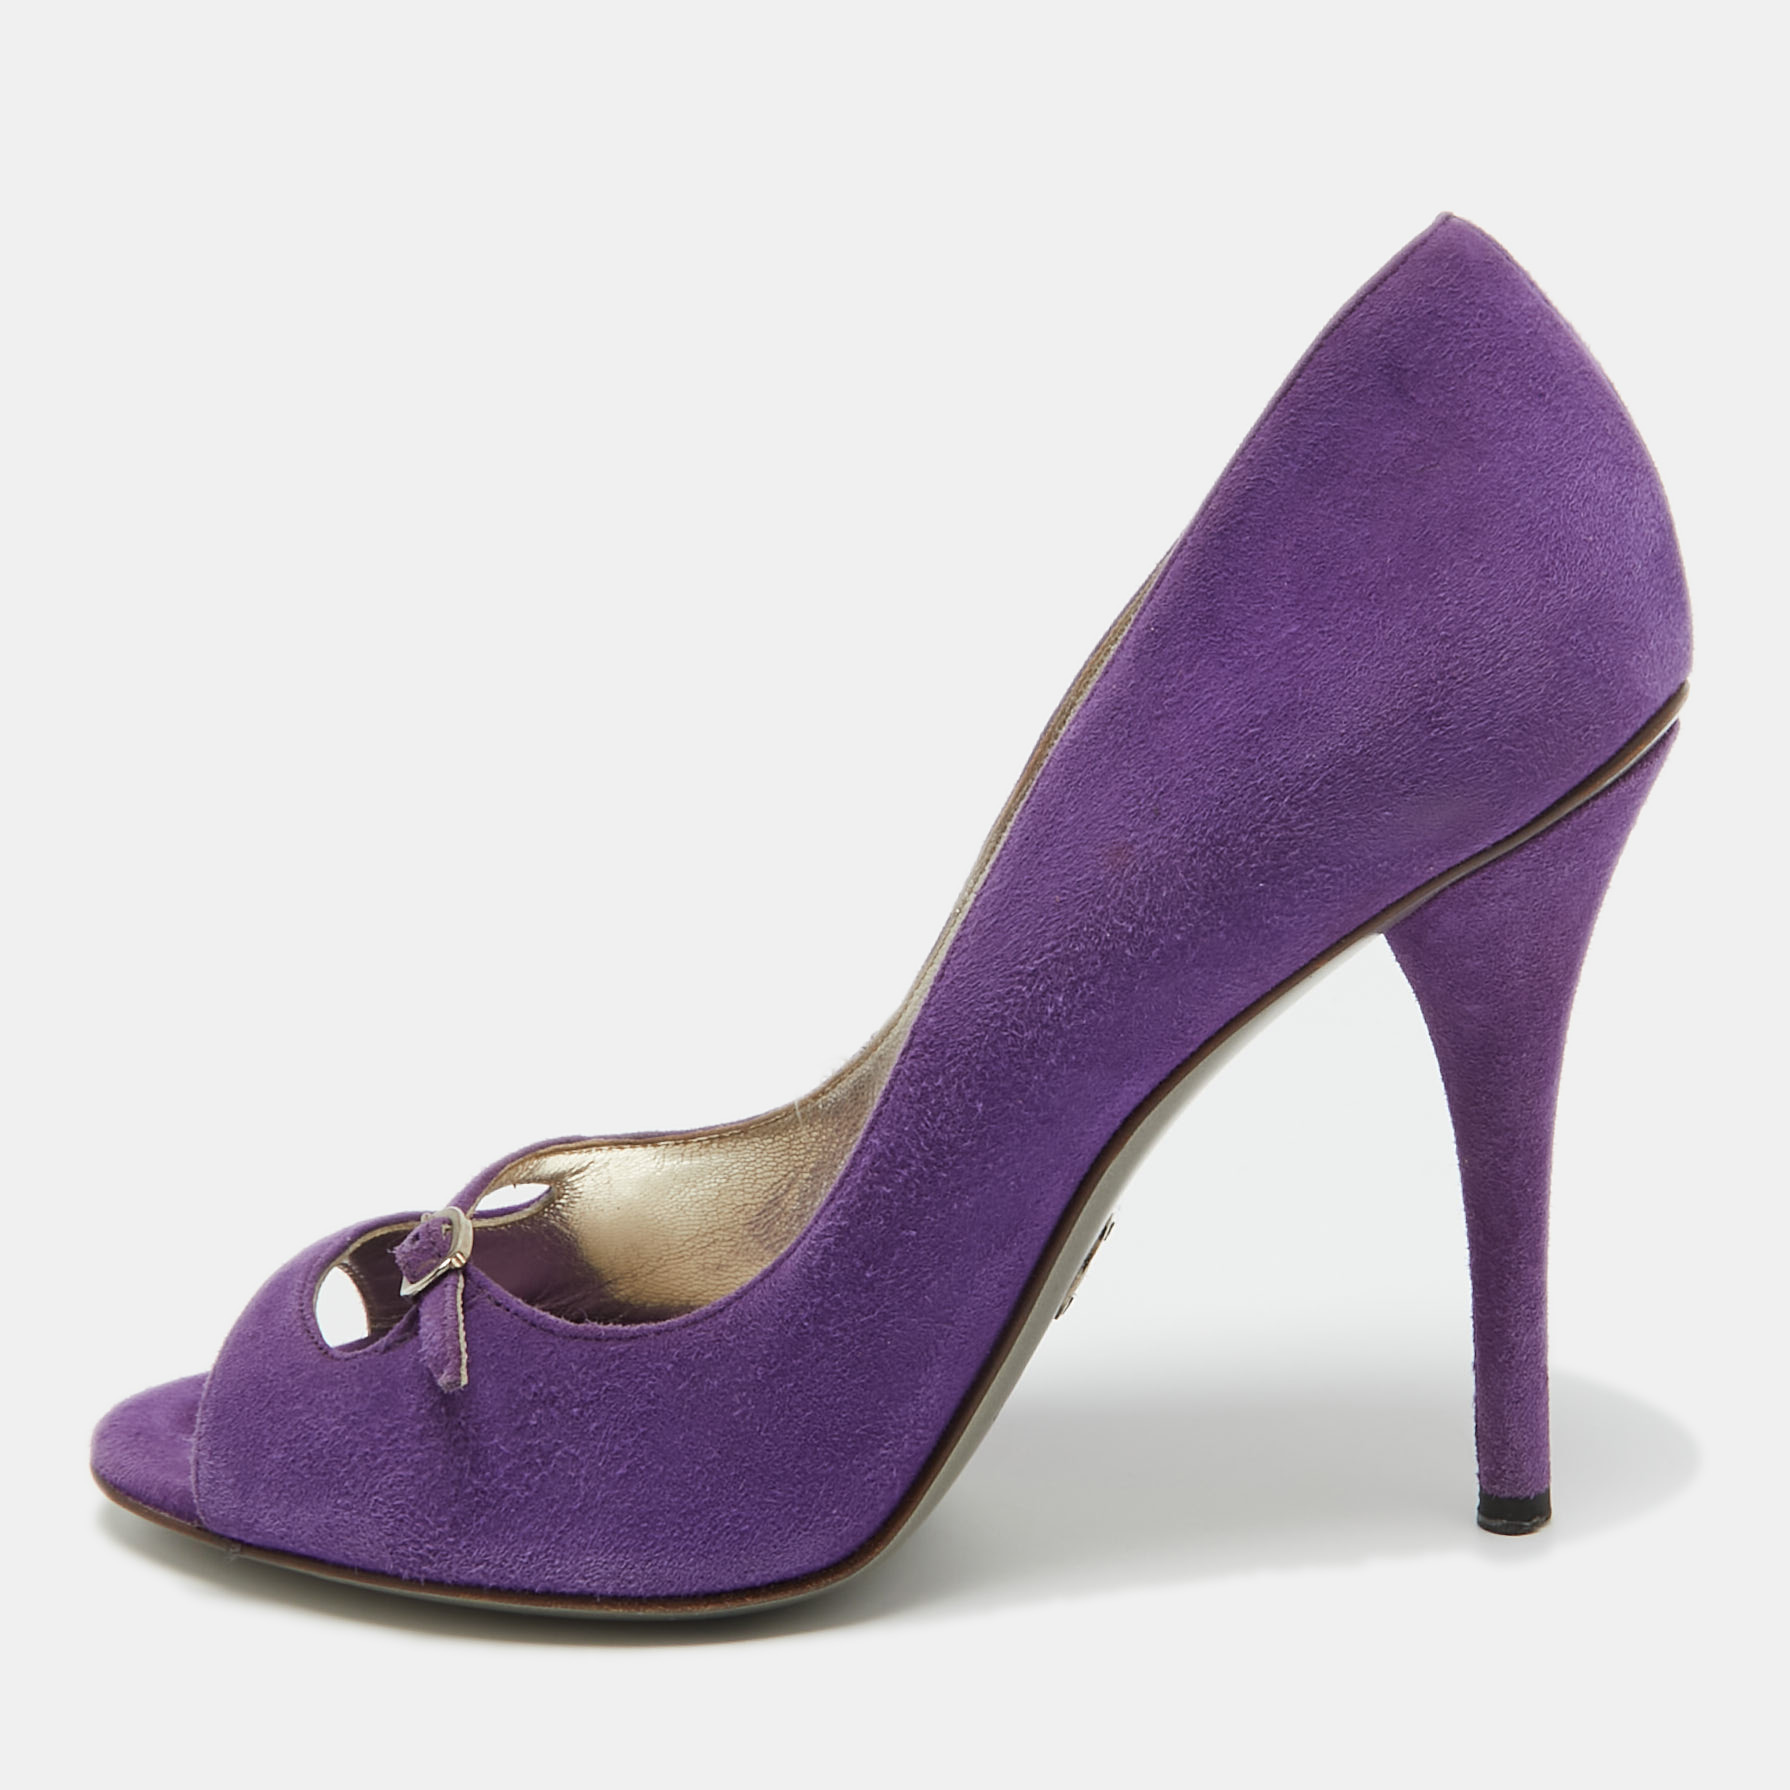 Dolce & gabbana purple suede open toe pumps size 38